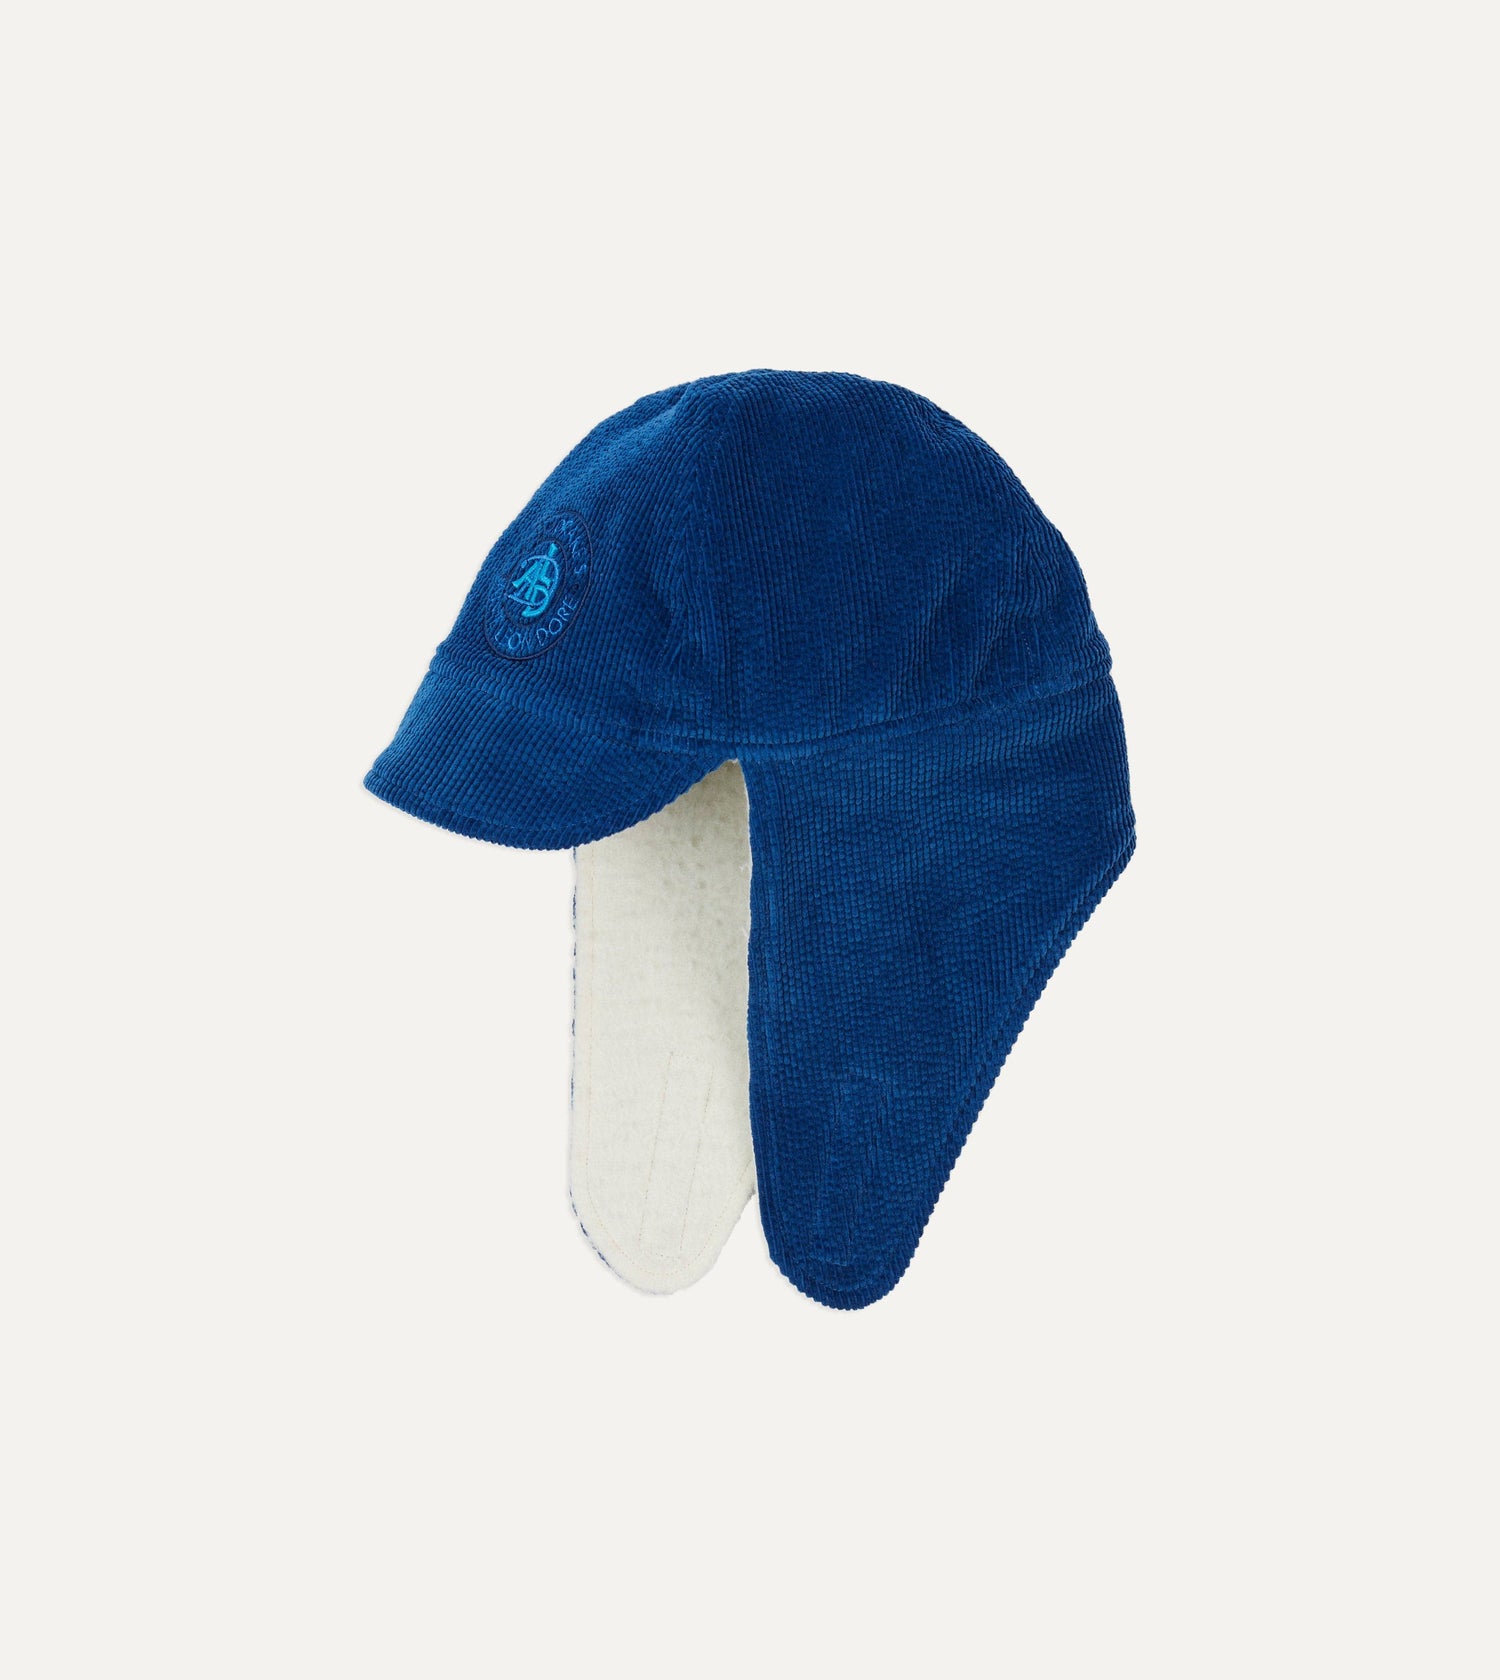 ALD / Drake's Blue Expedition Hat